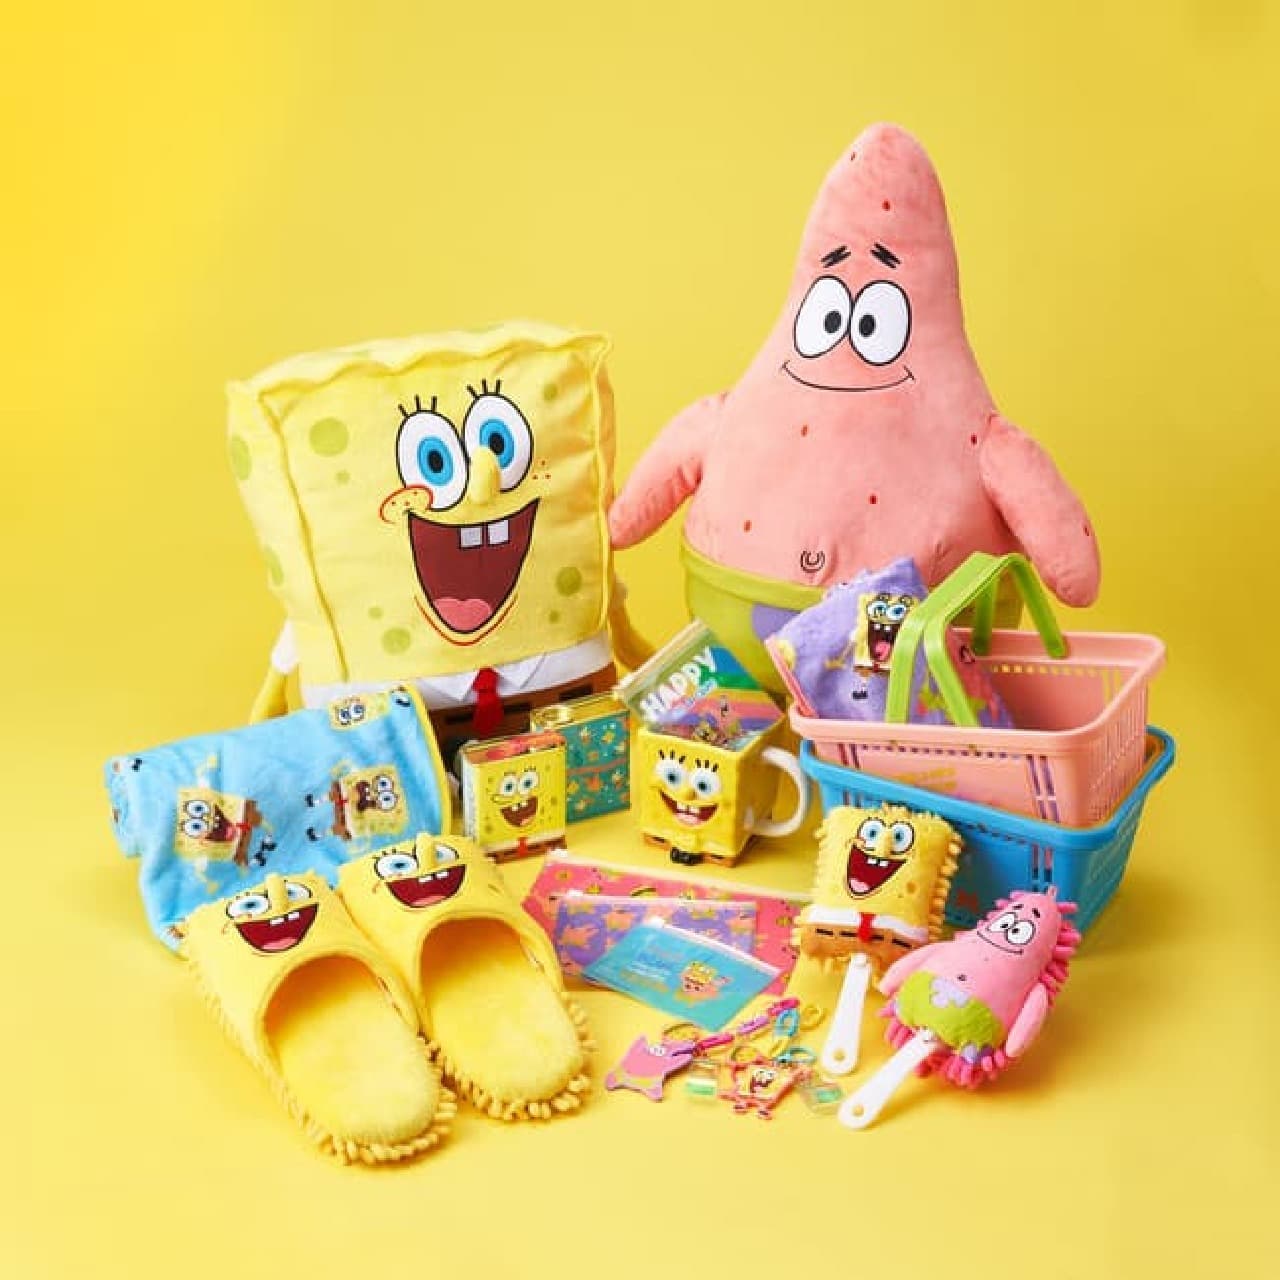 PLAZA / MINiPLA "SpongeBob" promotion --Mugs, blankets, cleaning items, etc.